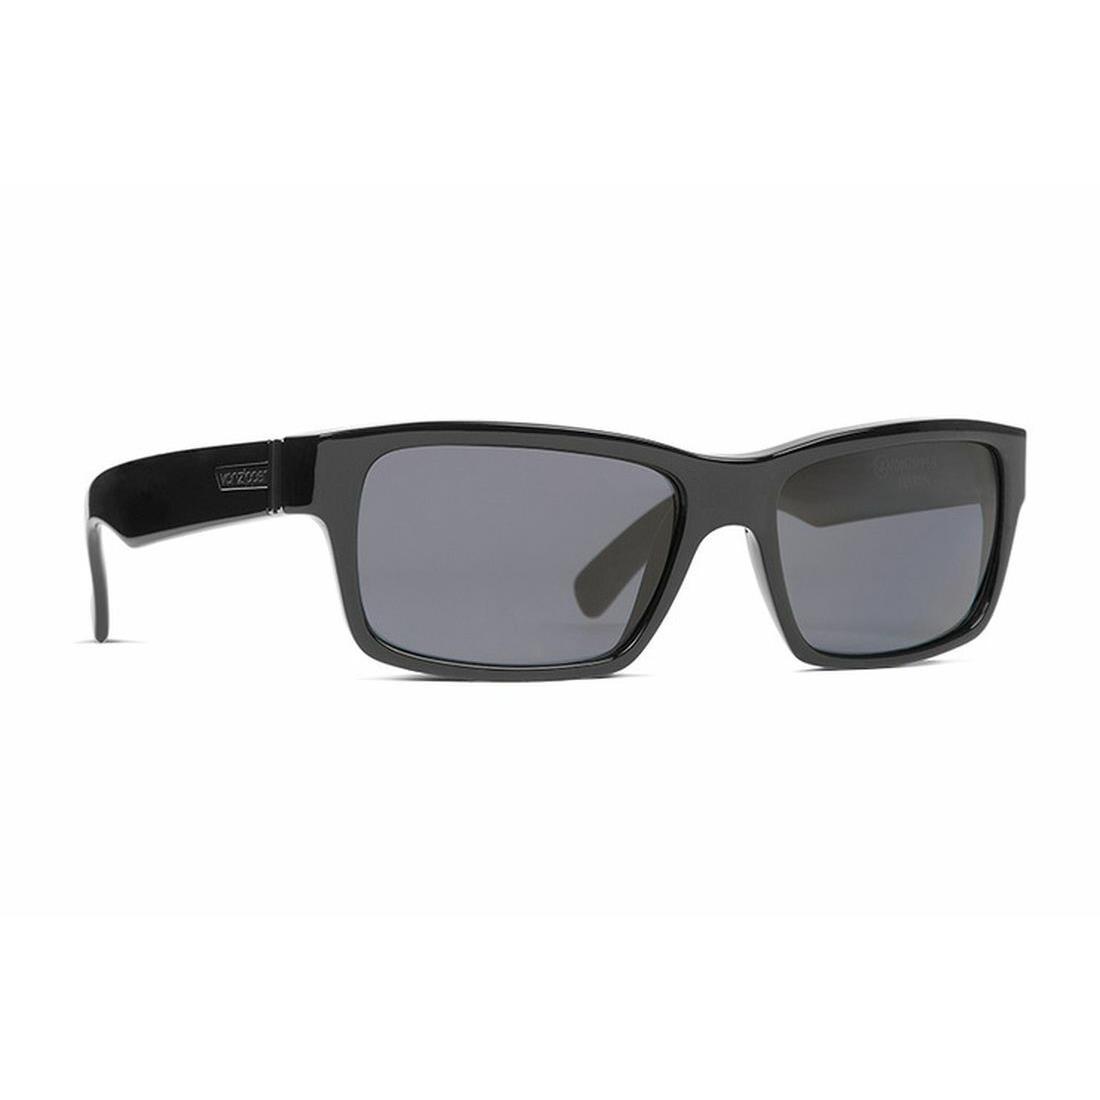 Vonzipper Fulton Sunglasses Black Gloss with Grey Lens - Black Frame, Grey Lens